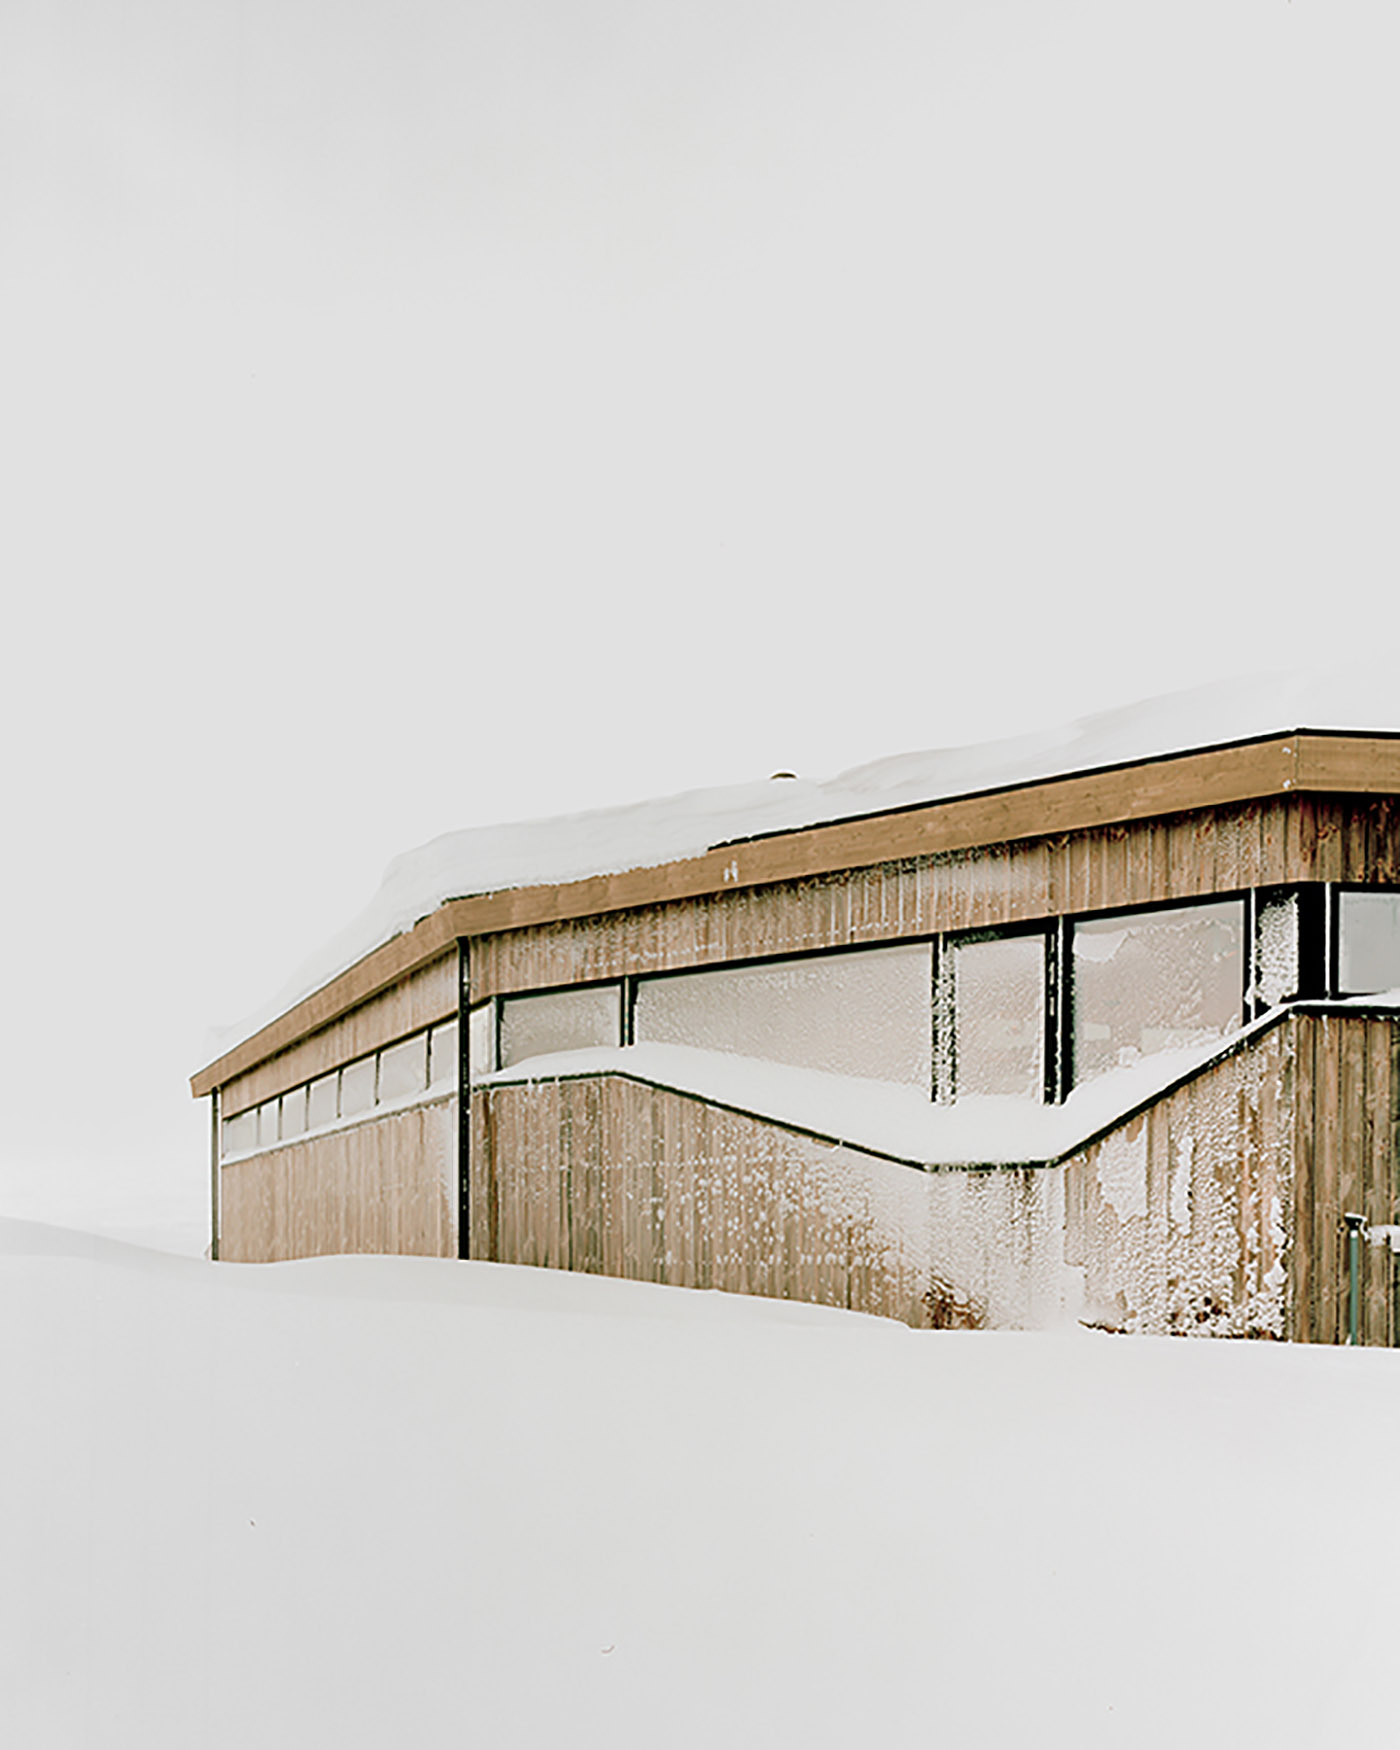 Gudbrandslie Cabin, a spruce chalet inspired its shape by the landscape